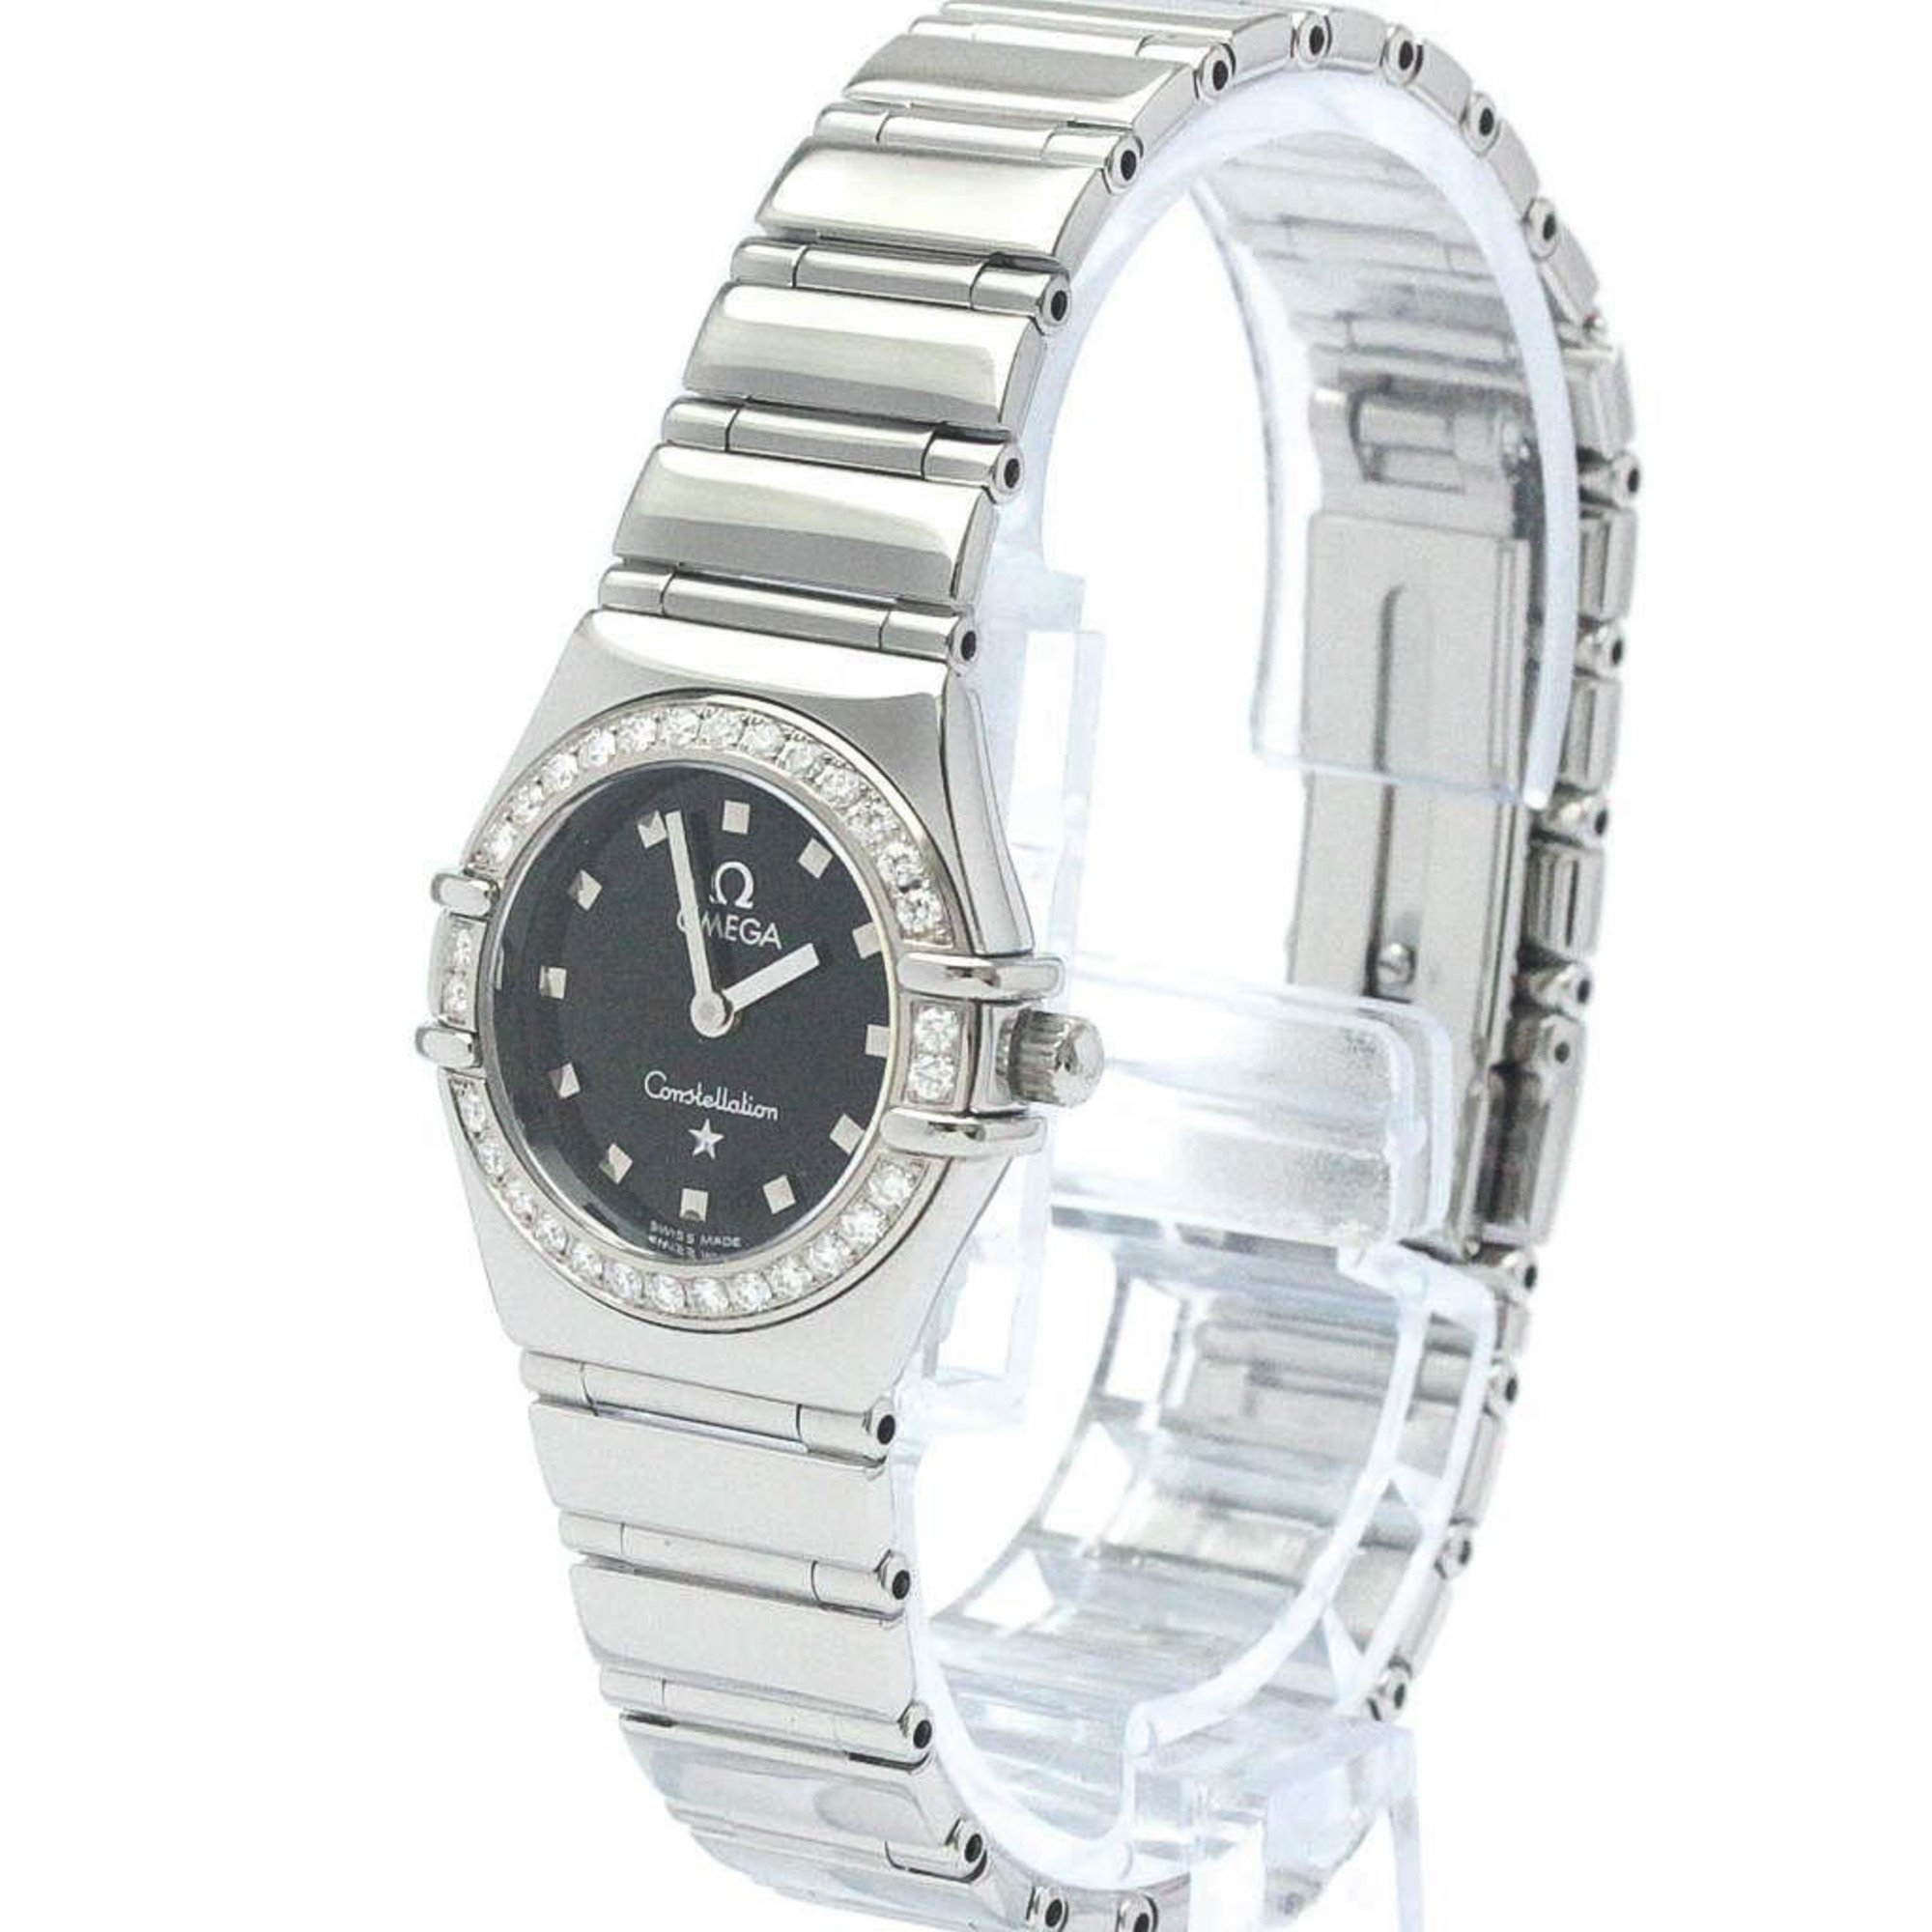 Polished OMEGA Constellation My Choice Diamond Ladies Watch 1465.51 BF566805